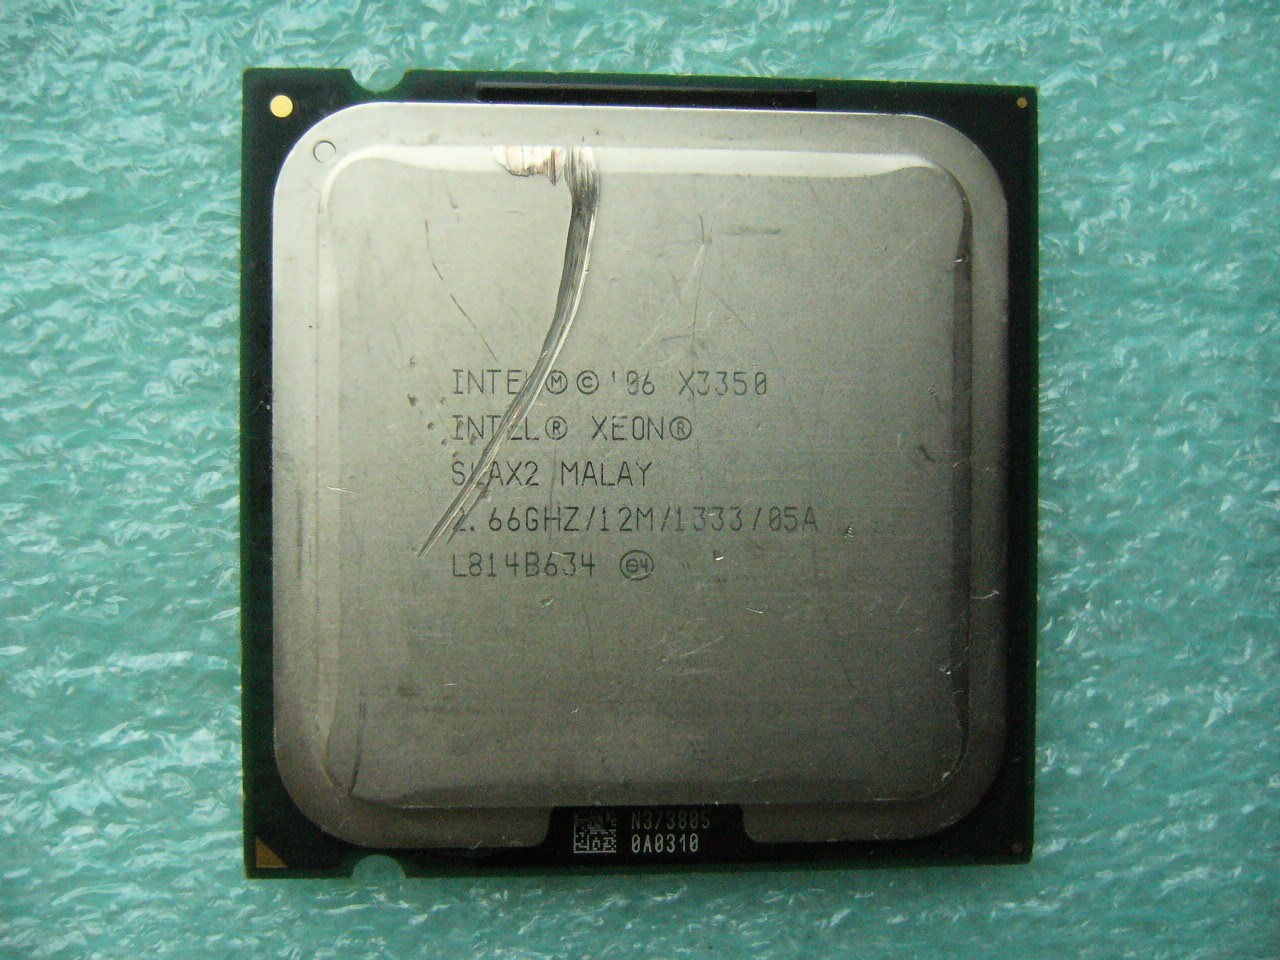 QTY 1x INTEL Quad Cores X3350 CPU 2.66GHz/12MB/1333Mhz LGA775 SLAX2 - zum Schließen ins Bild klicken